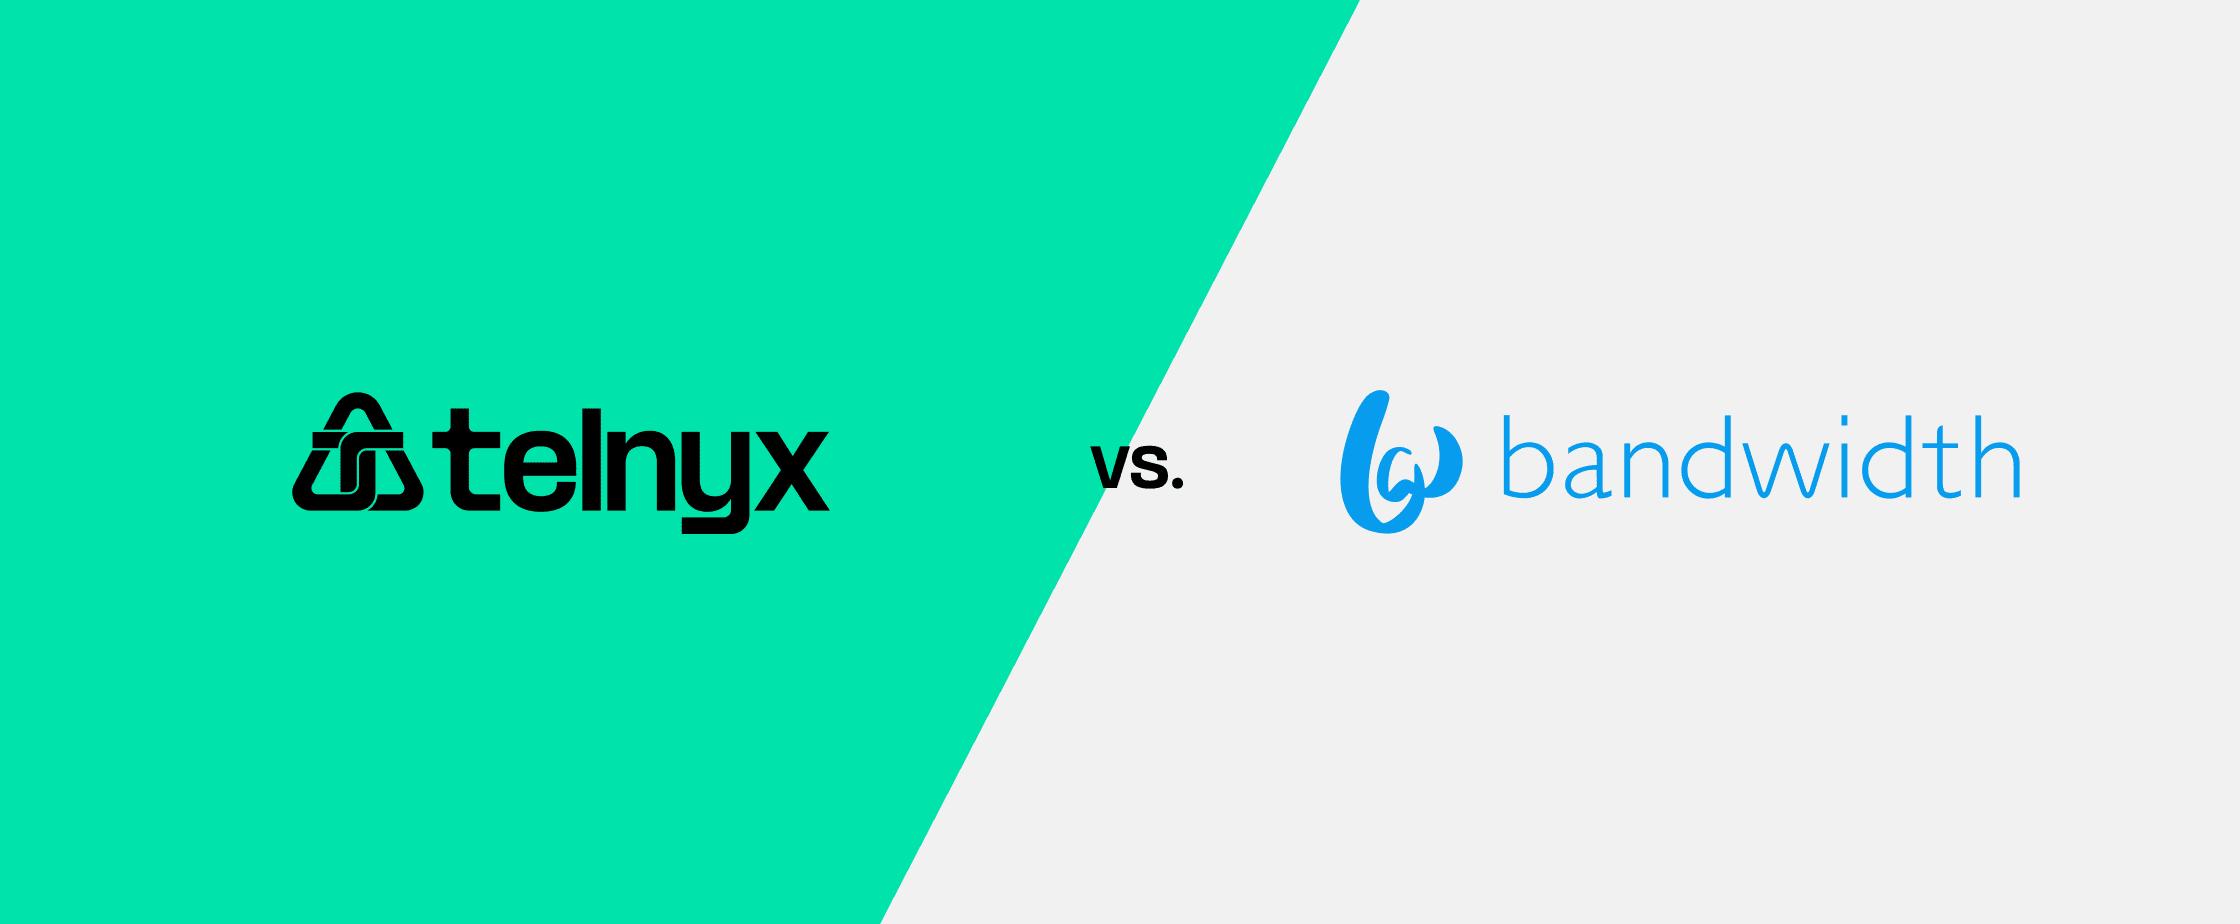 Telnyx and Bandwidth logos